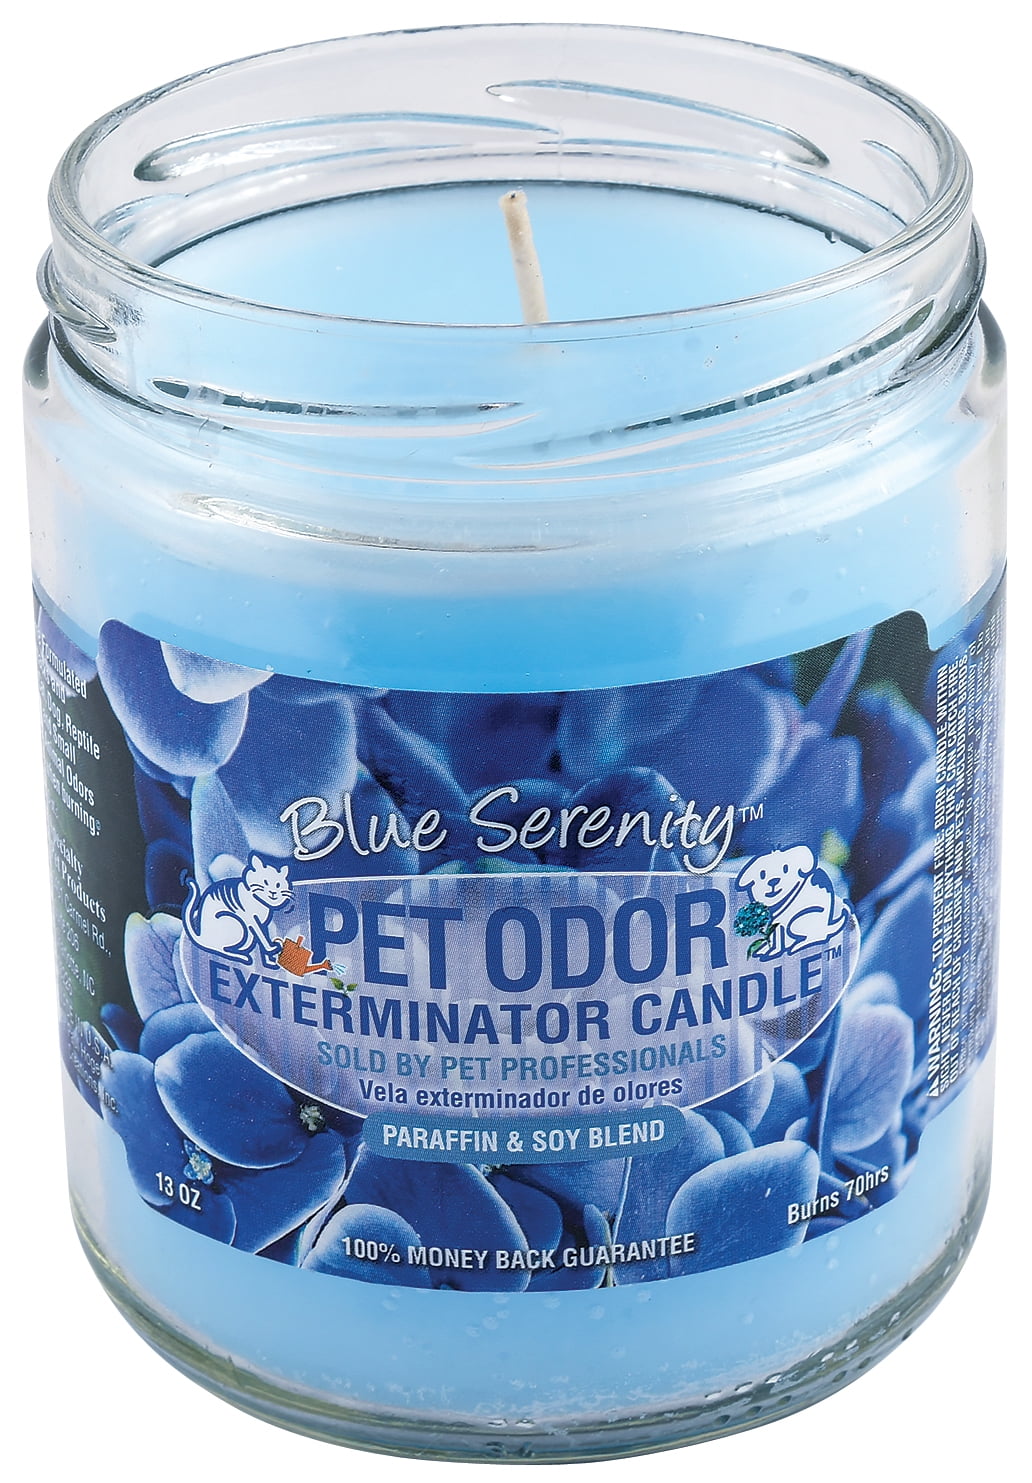 Smoke Odor Exterminator 13 oz Jar Candle Nag Champa